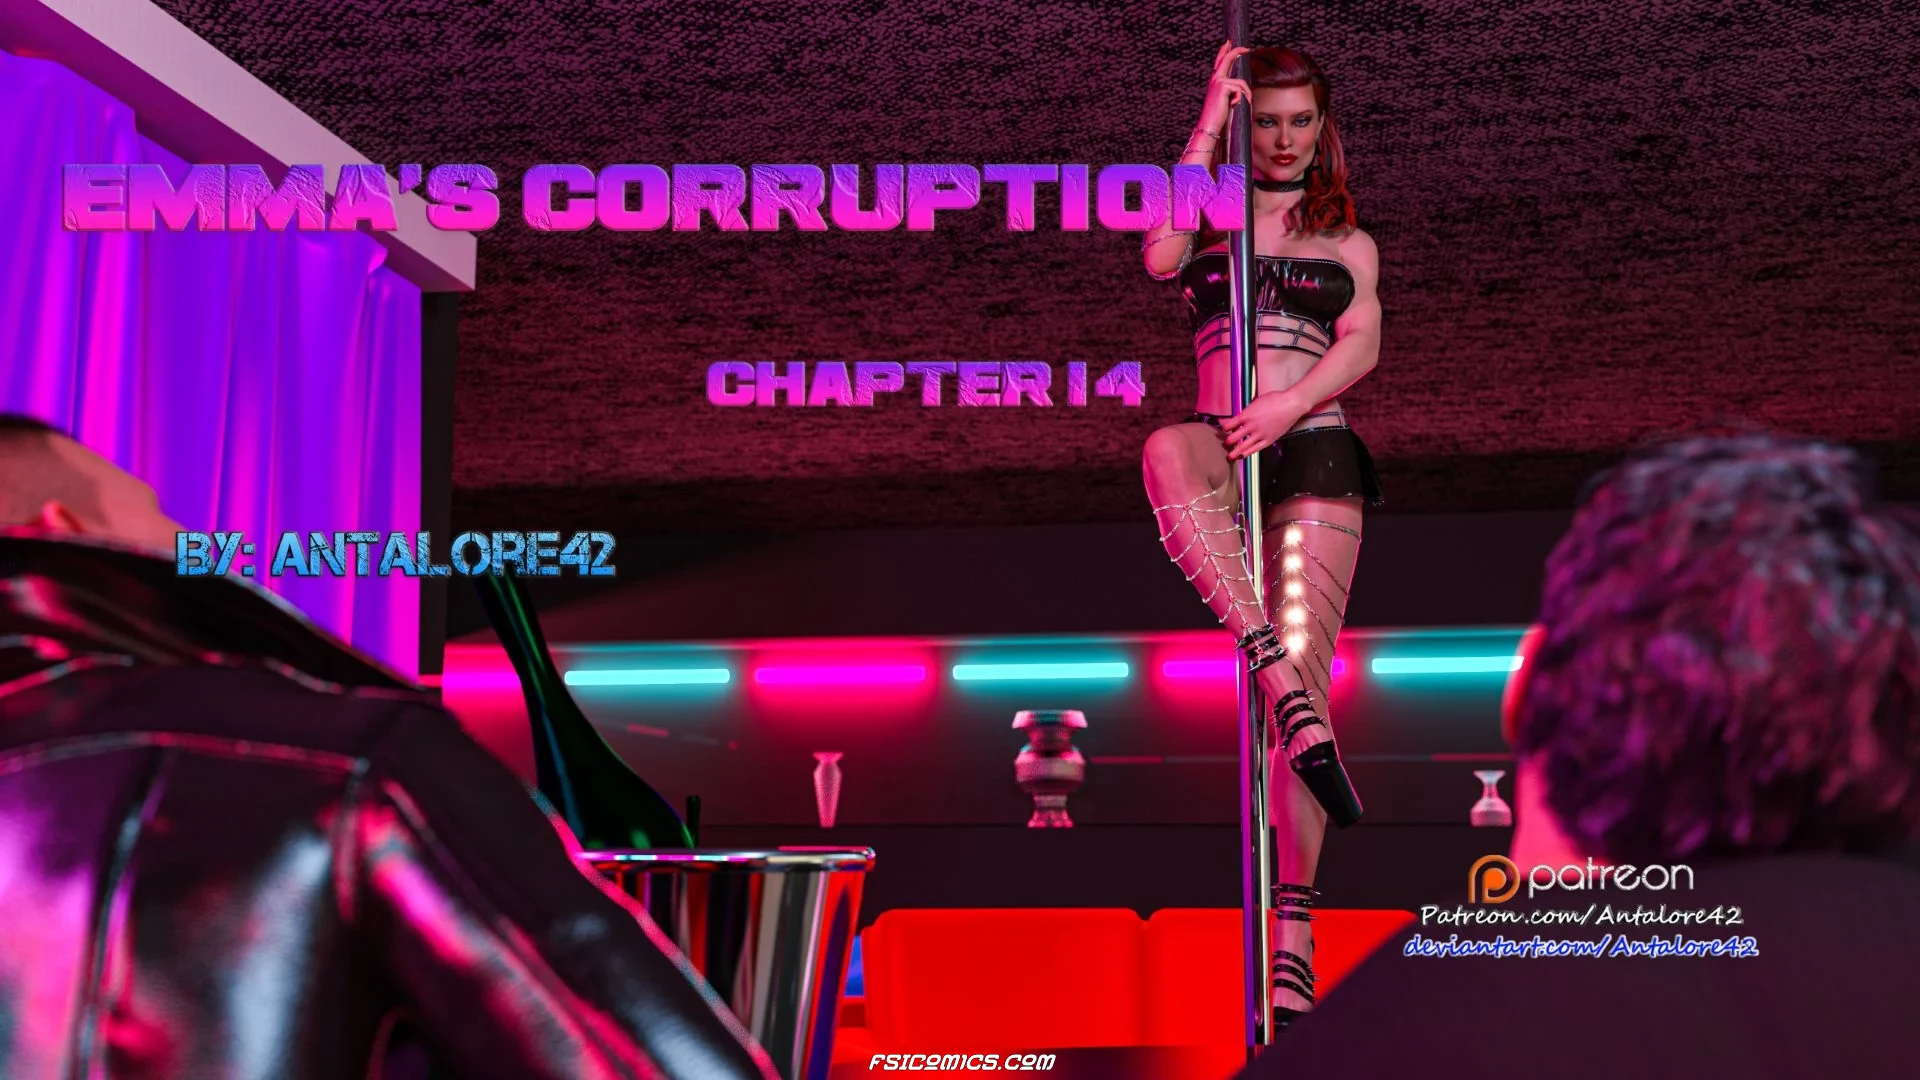 Emmas Corruption Chapter 14 - Antalore42 - 3 - FSIComics